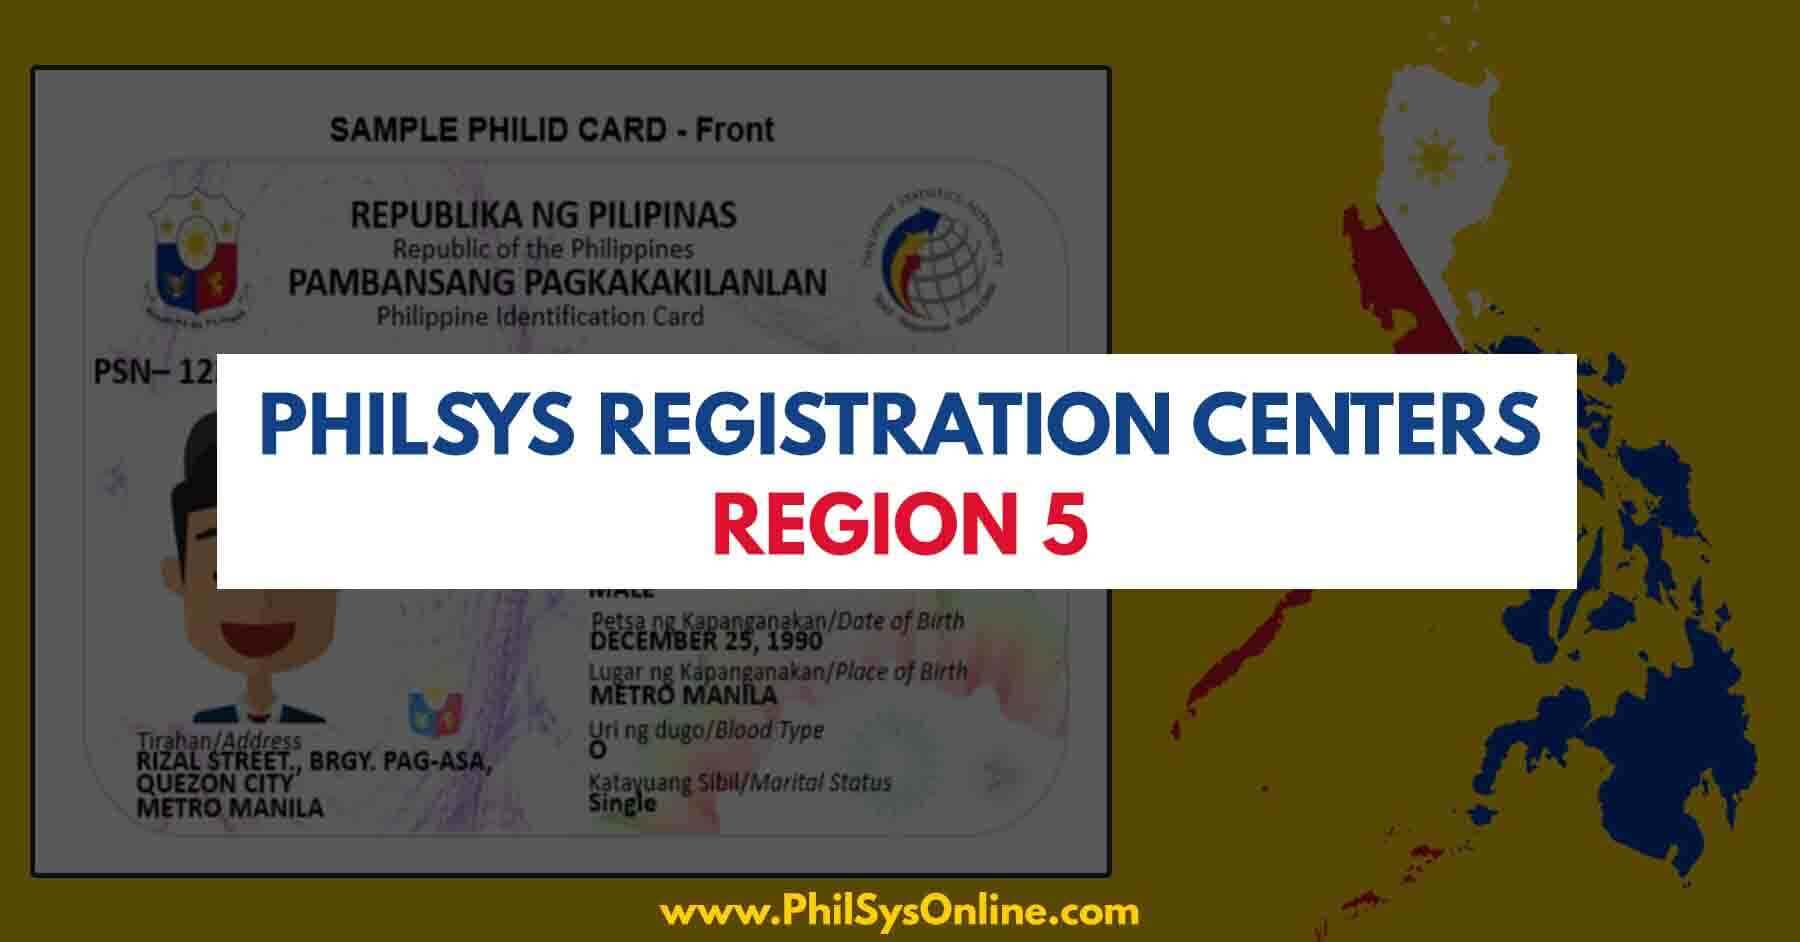 philsys registration centers region 5 philippines